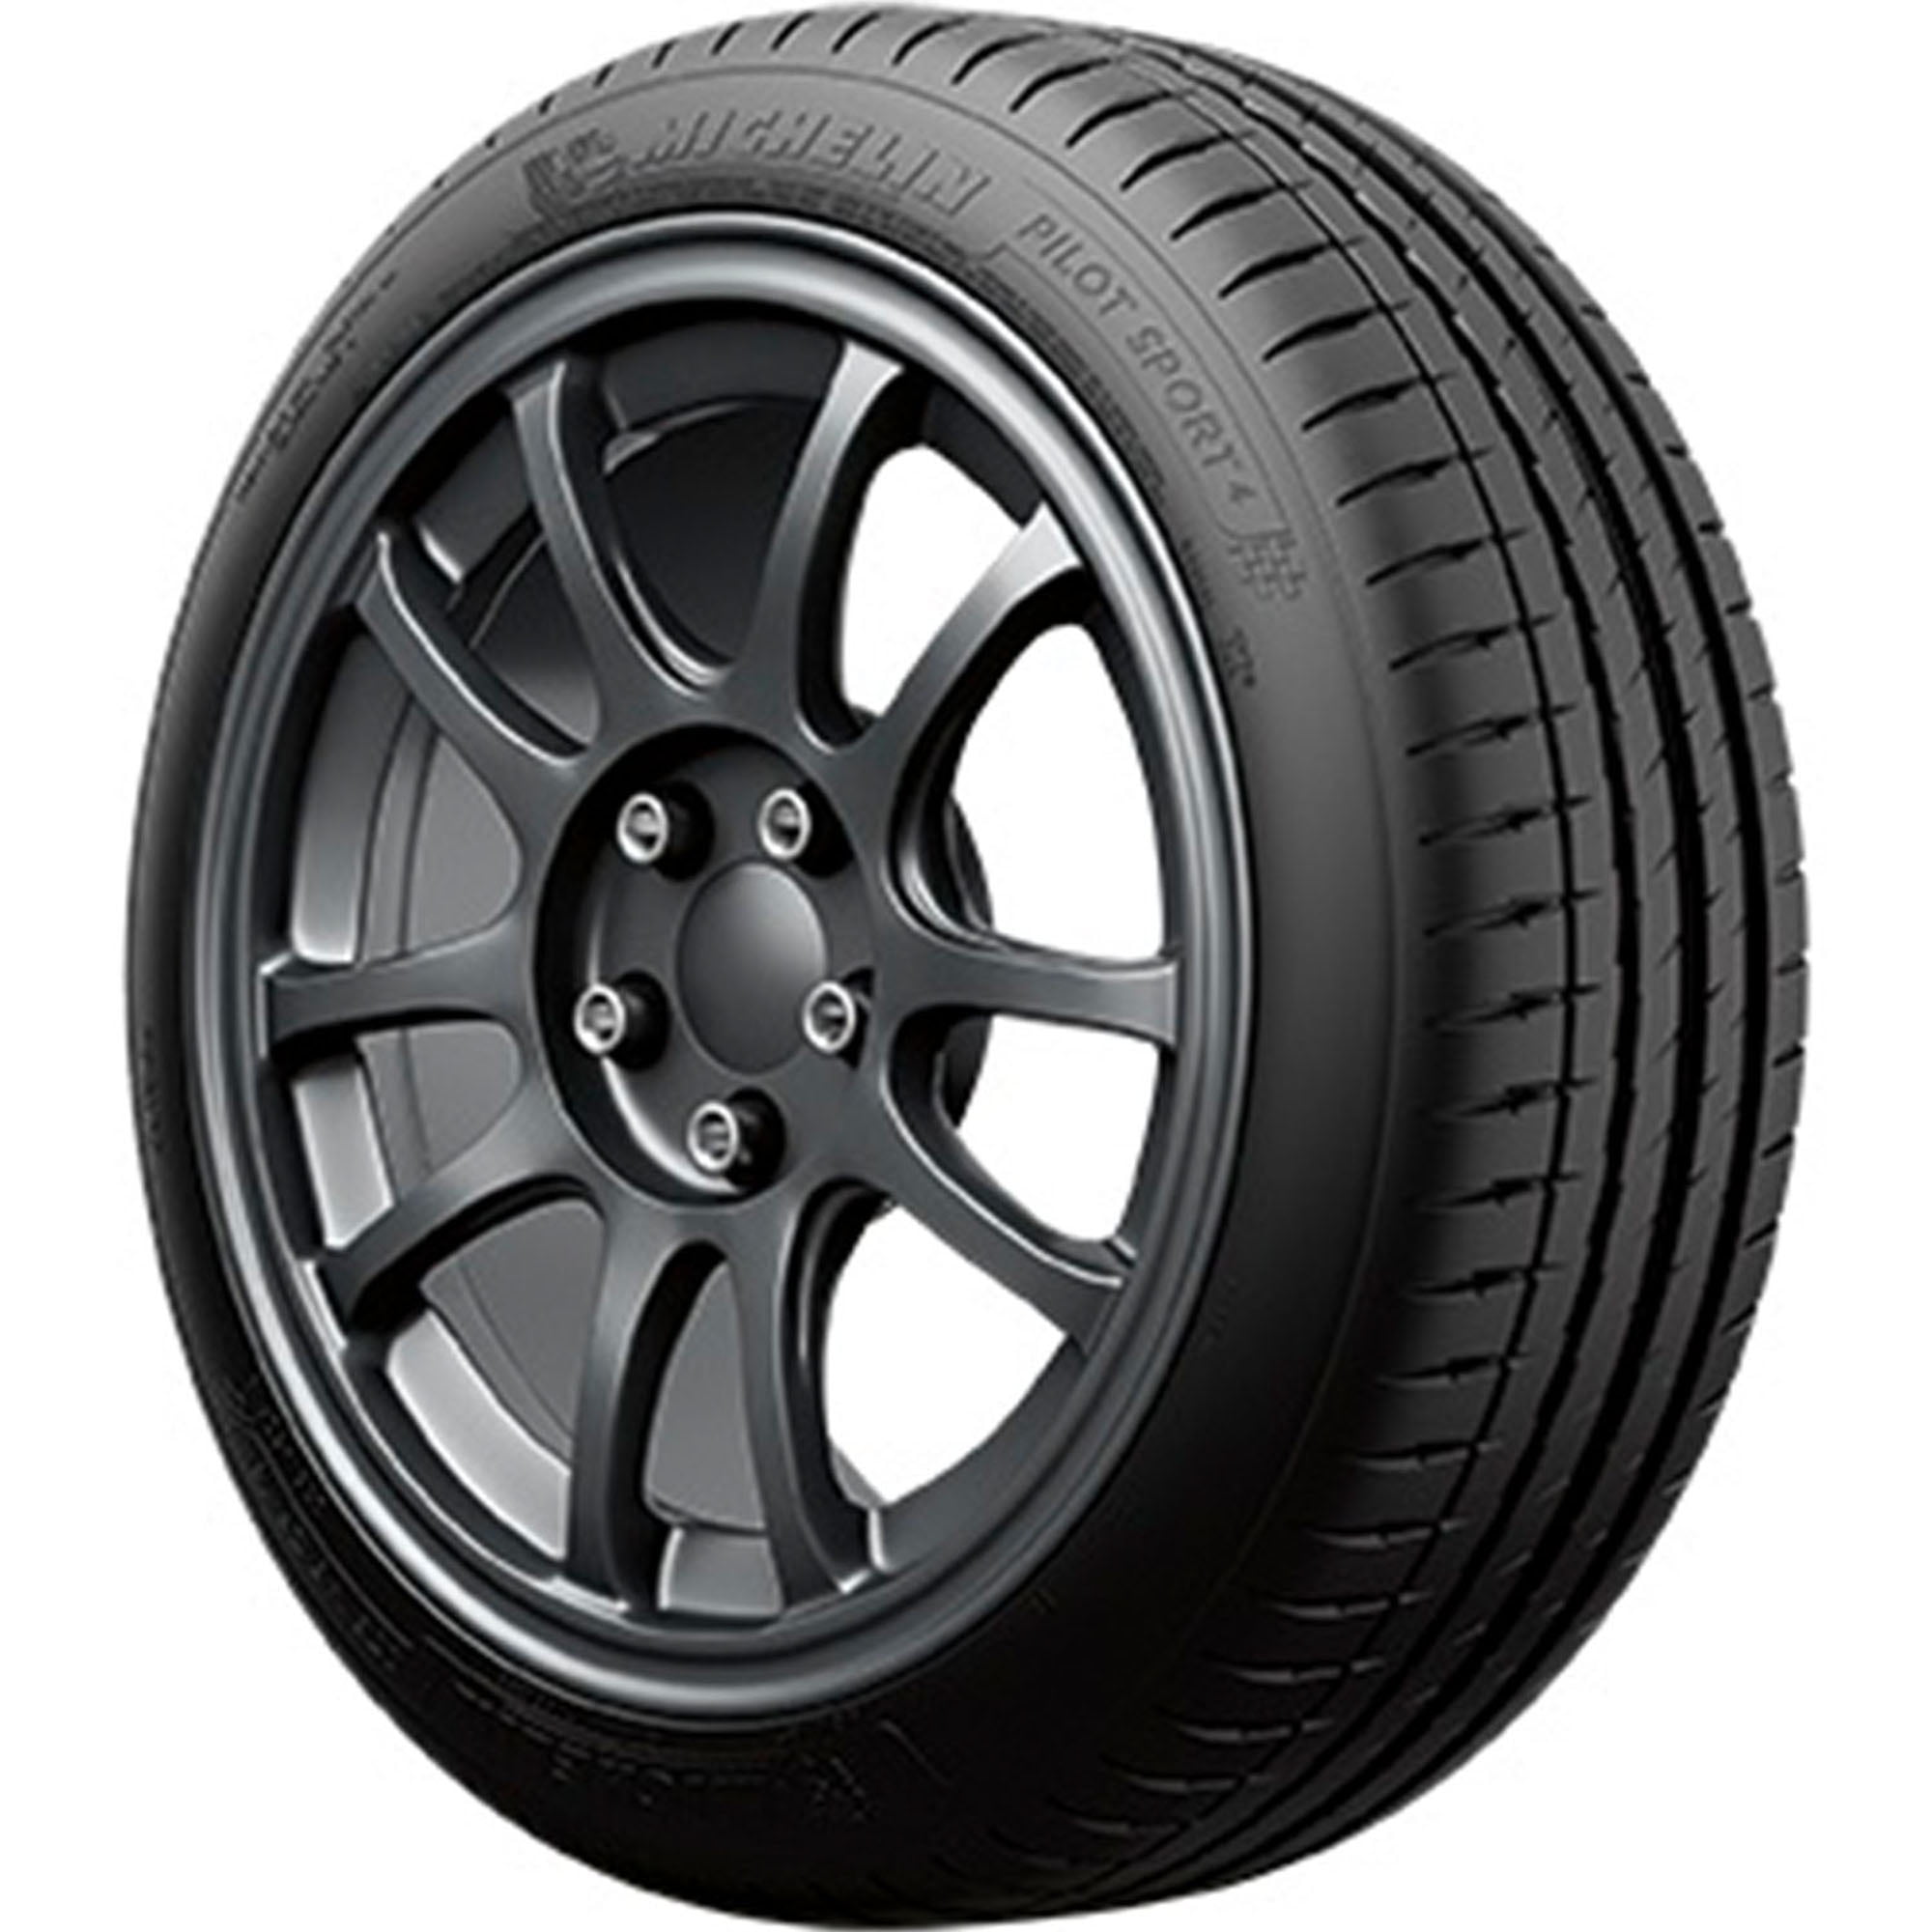 Michelin Pilot Sport 4 Summer 225/45ZR17 91Y Passenger Tire